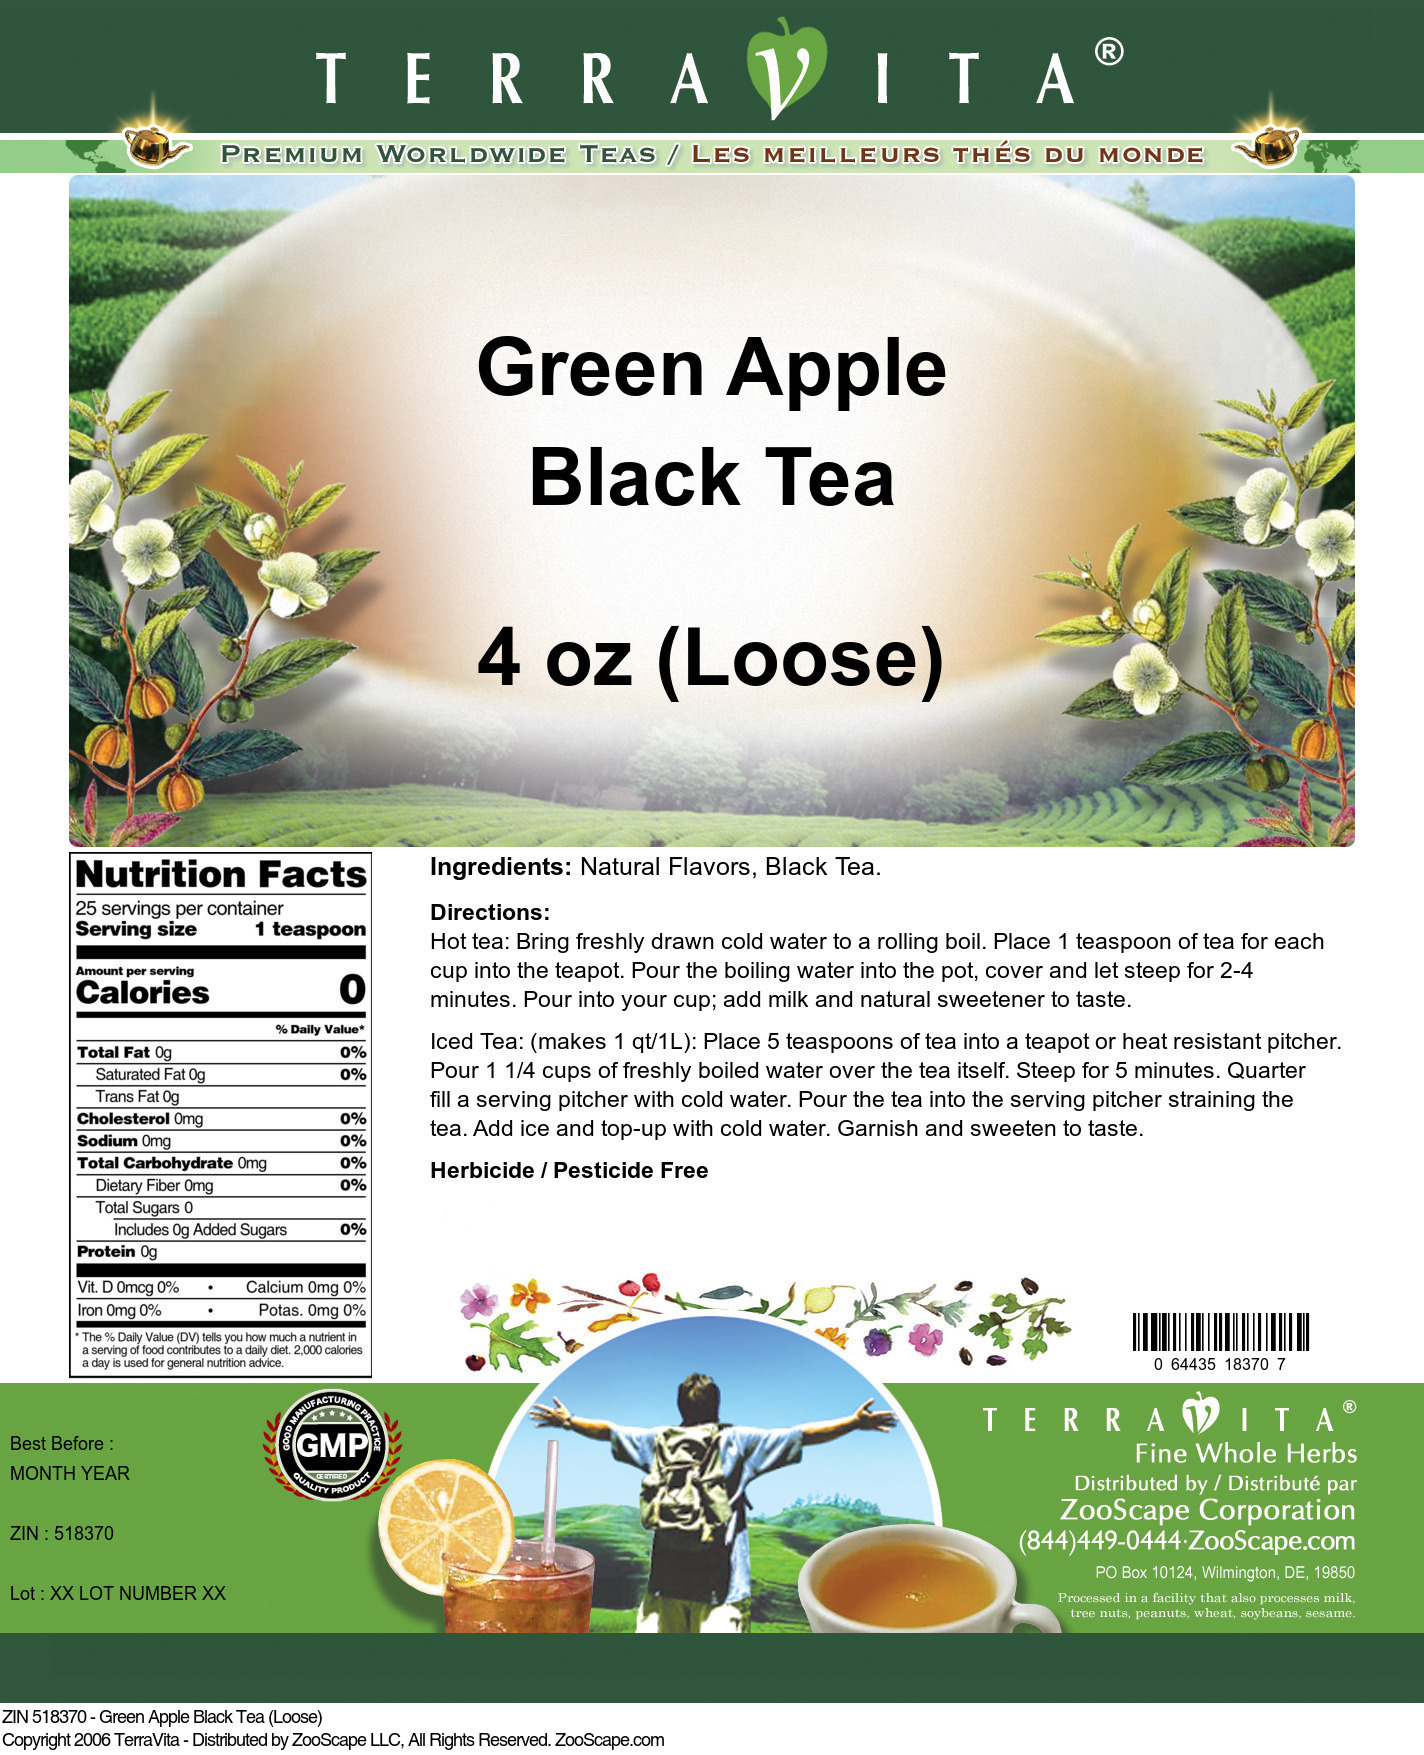 Green Apple Black Tea (Loose) - Label